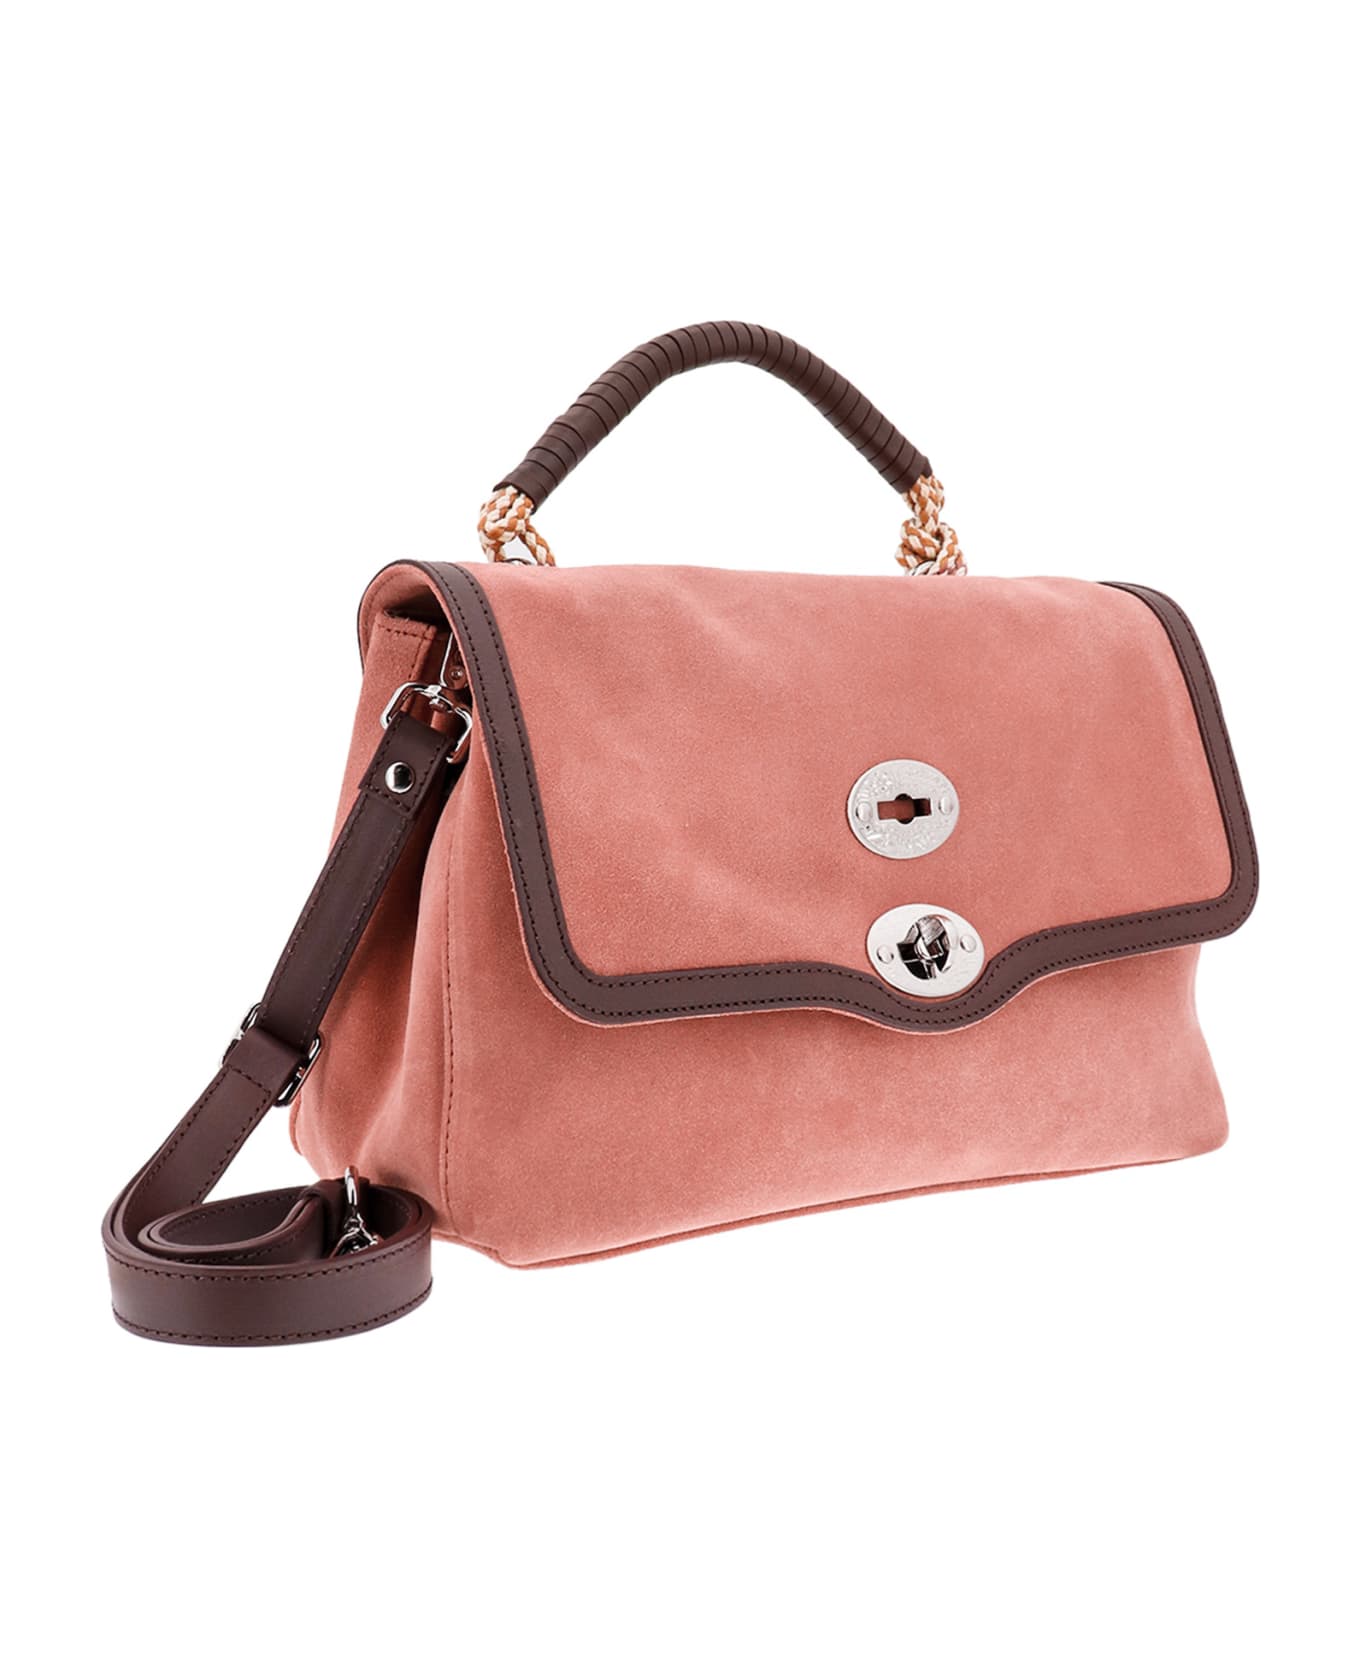 Zanellato Postina Sol Levante S Handbag - Pink